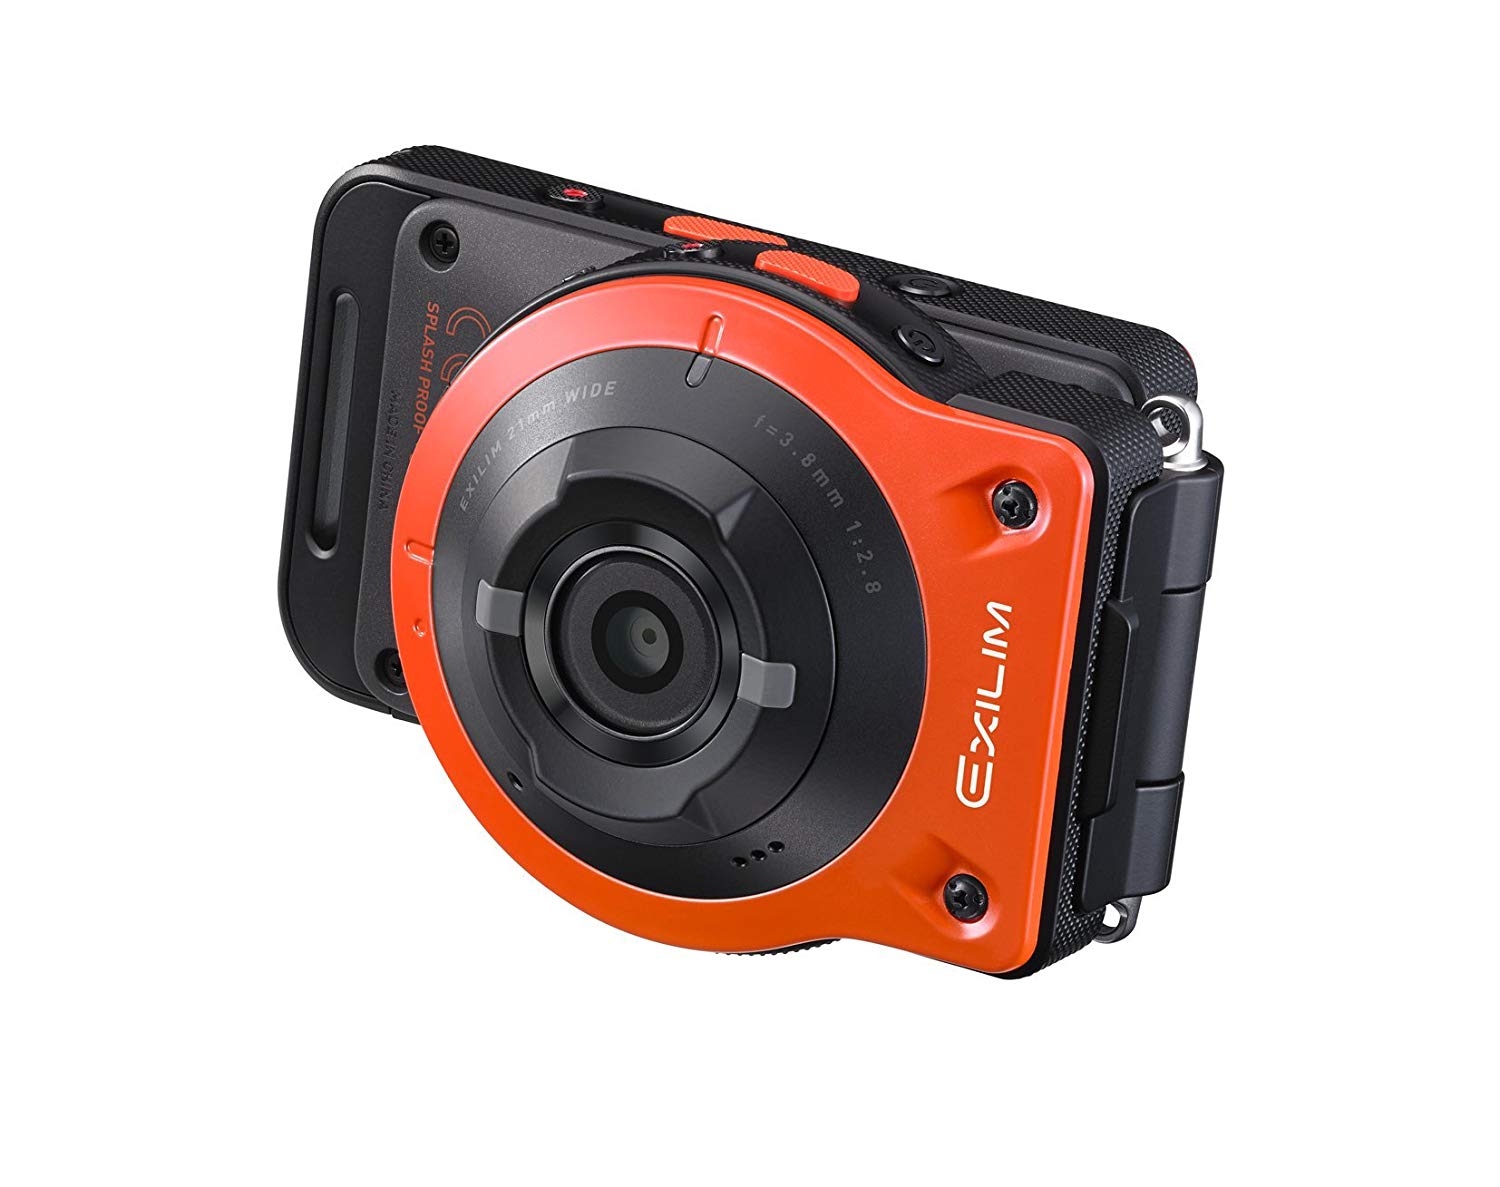 CASIO EX-FR10 EXILIM Digital Action Camera 14.1 MP - Orange - USB Reader + Wallet - 32GB microSD - Cleaning Kit Base Bundle